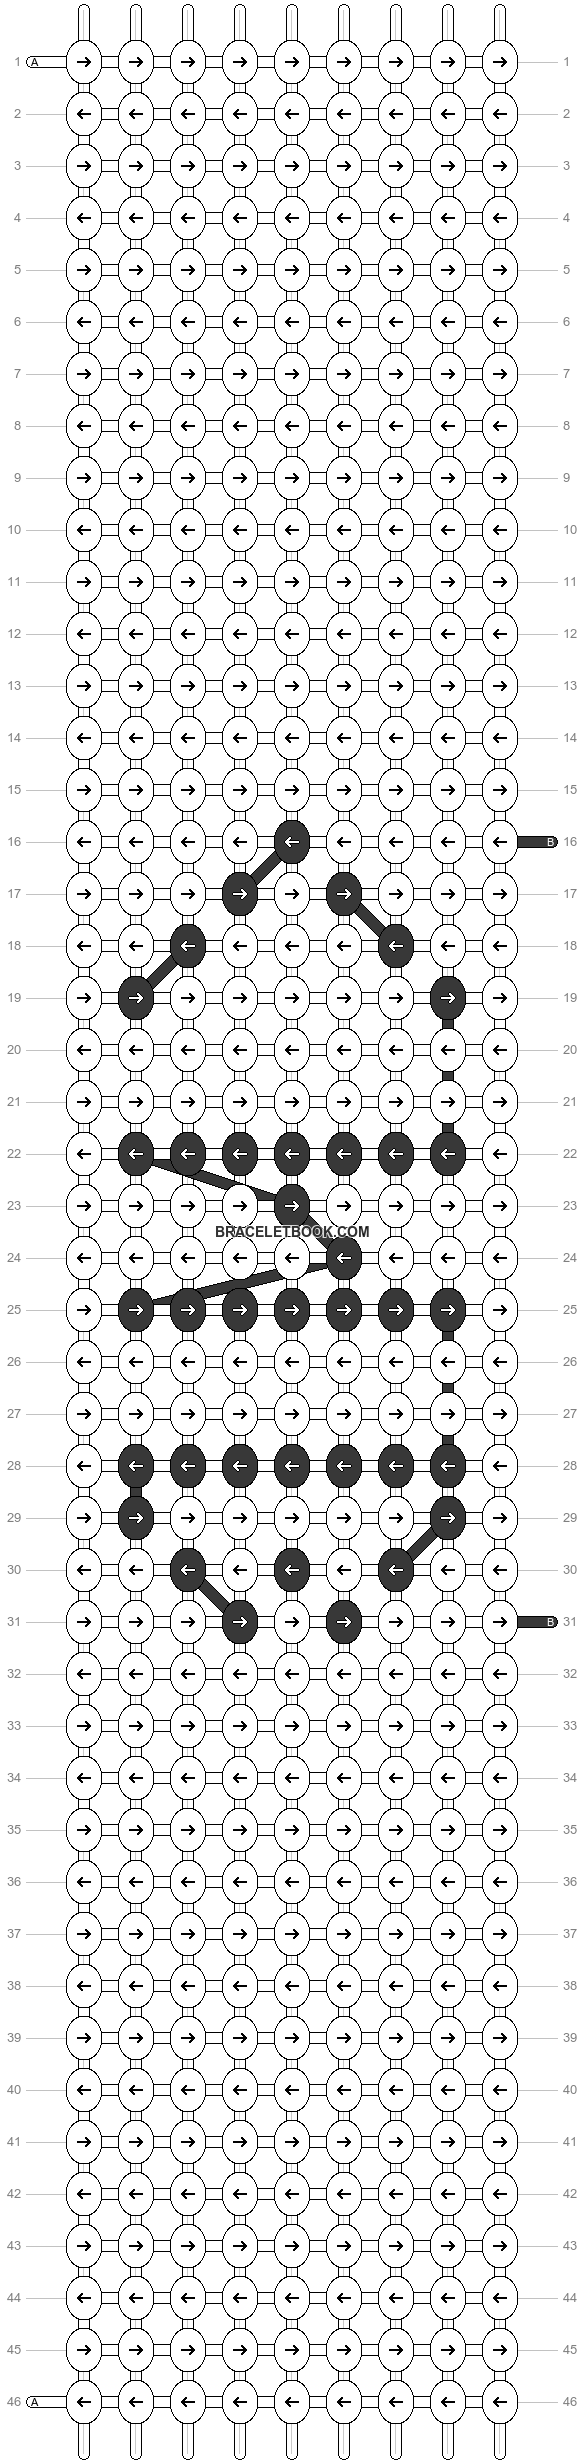 Alpha pattern #18289 variation #61458 pattern